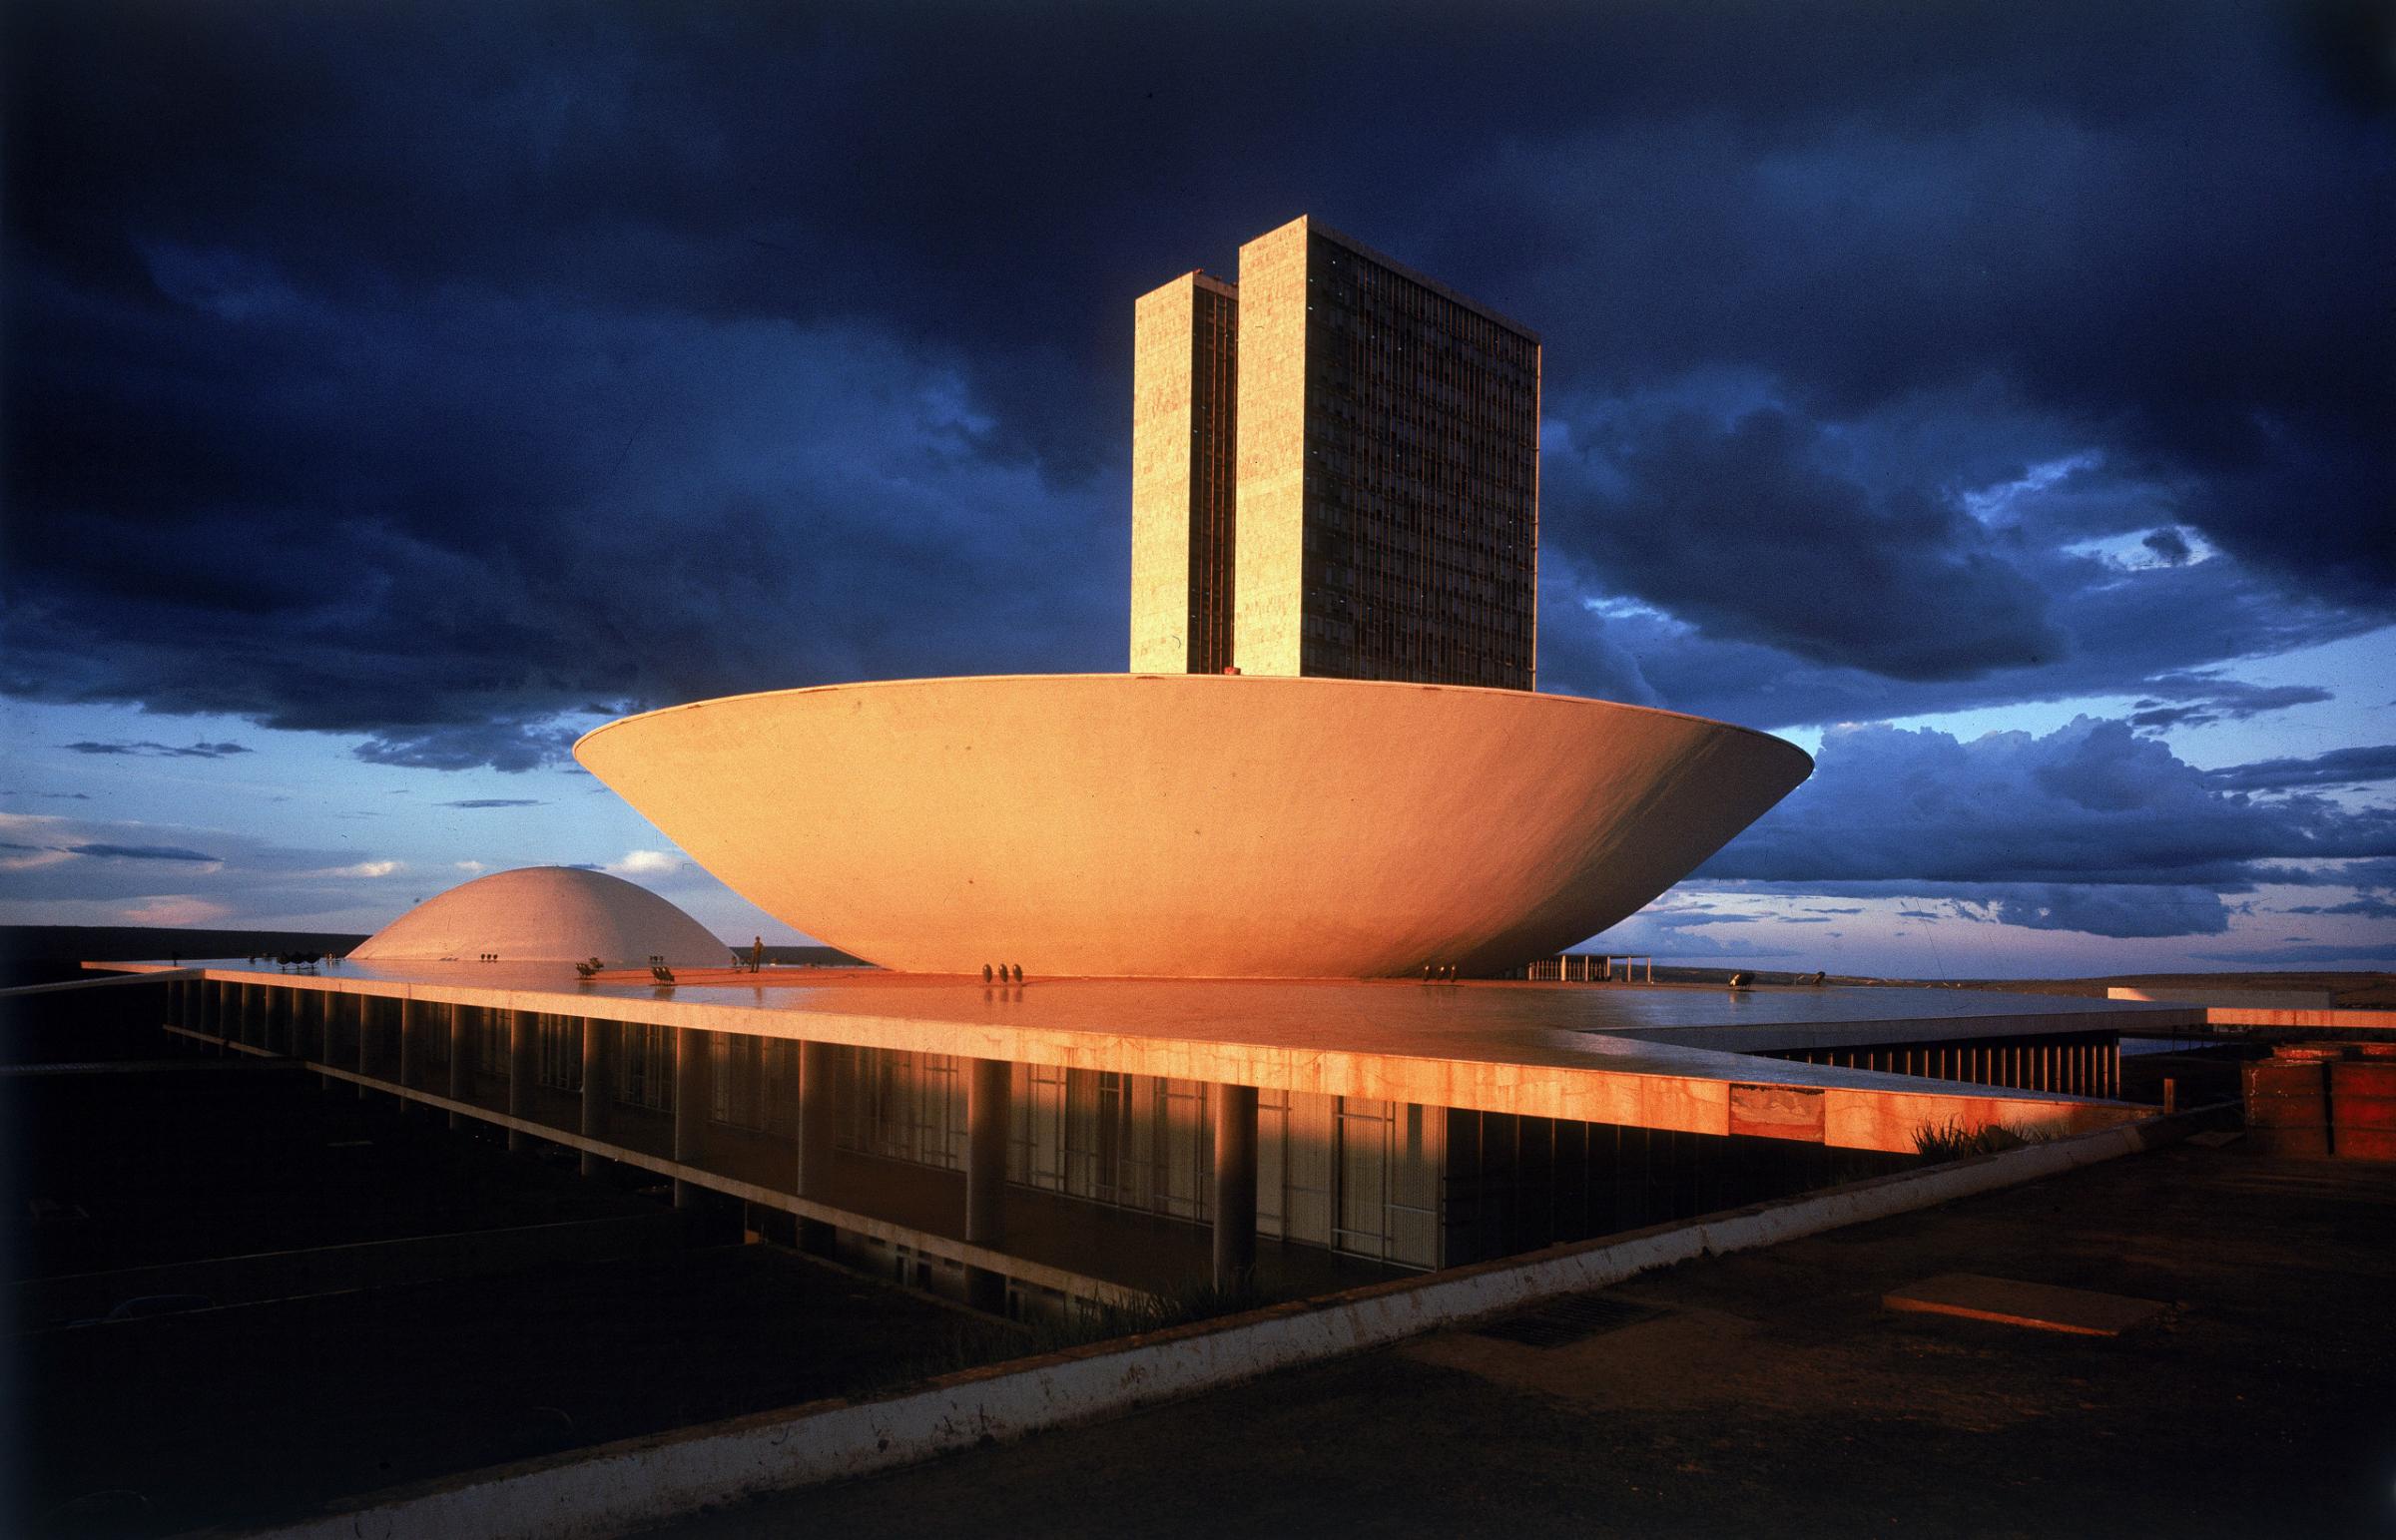 National Congress of Brazil, designed by architect Oscar Niemeyer, 1961.